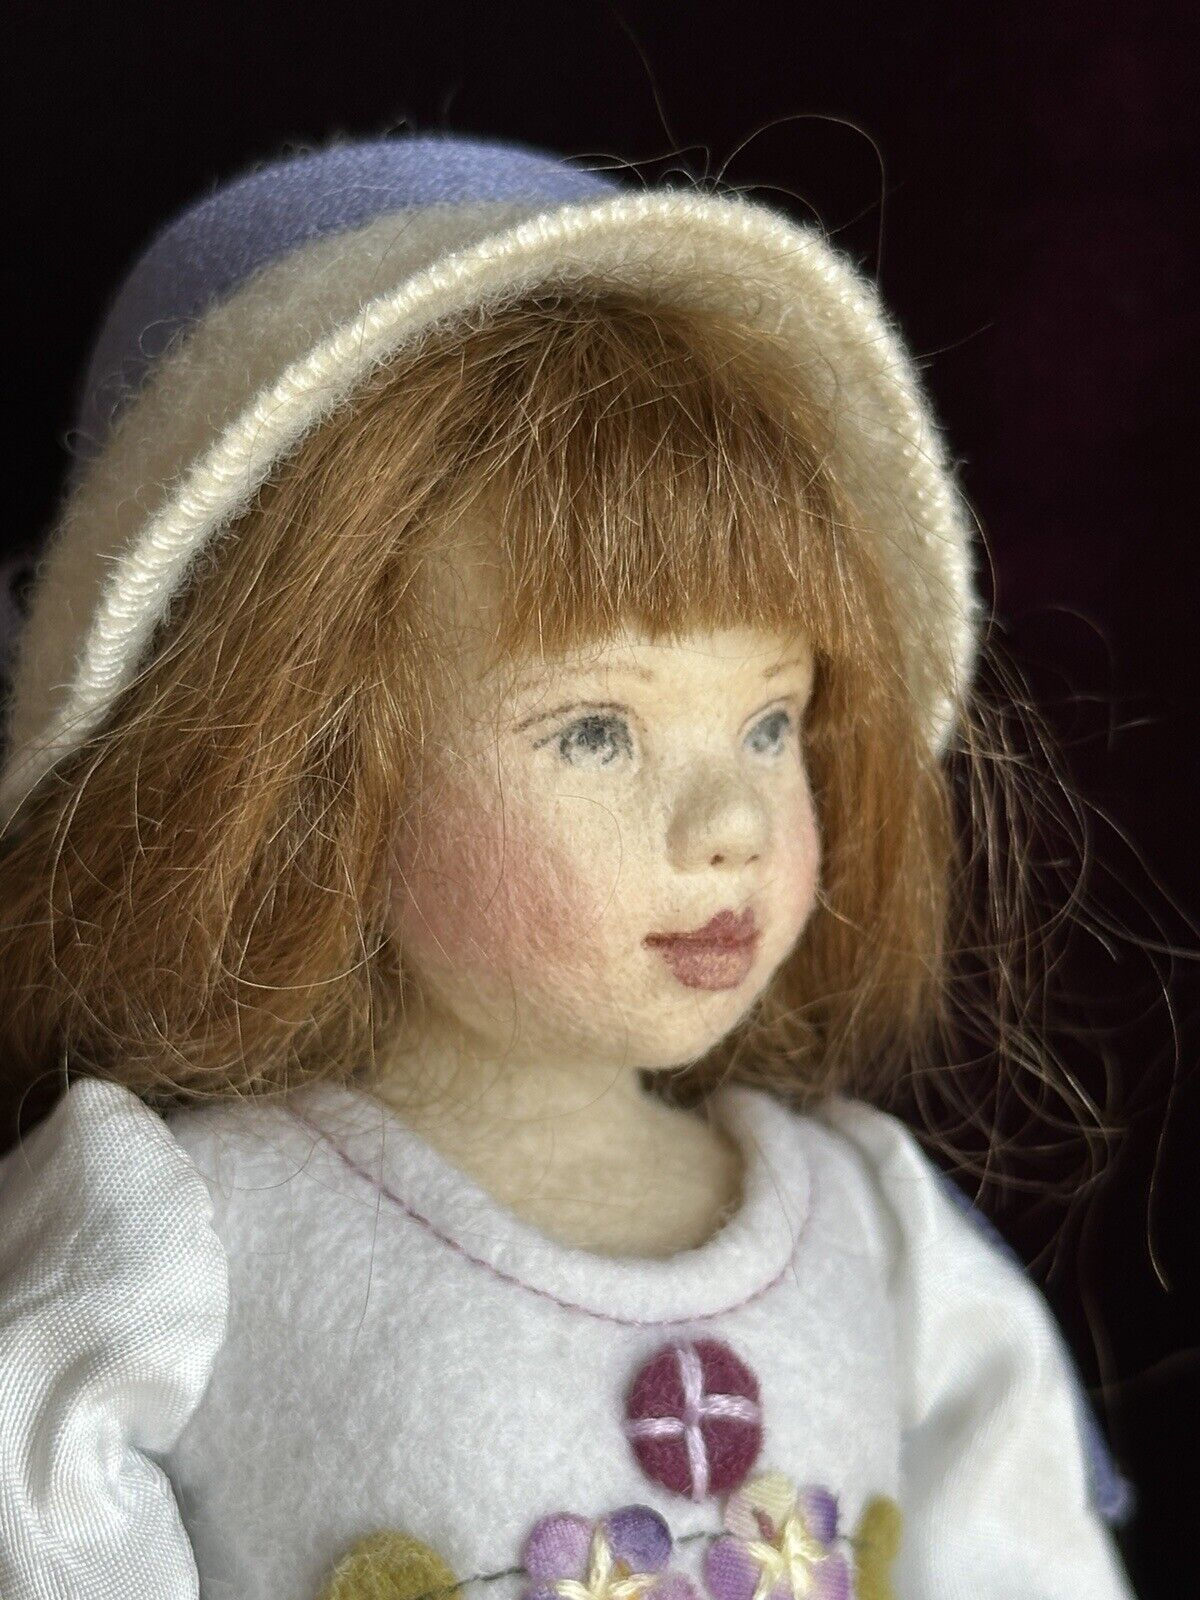 Collectible 8” Miggie Iacono UFDC Kim Felt Doll with Box